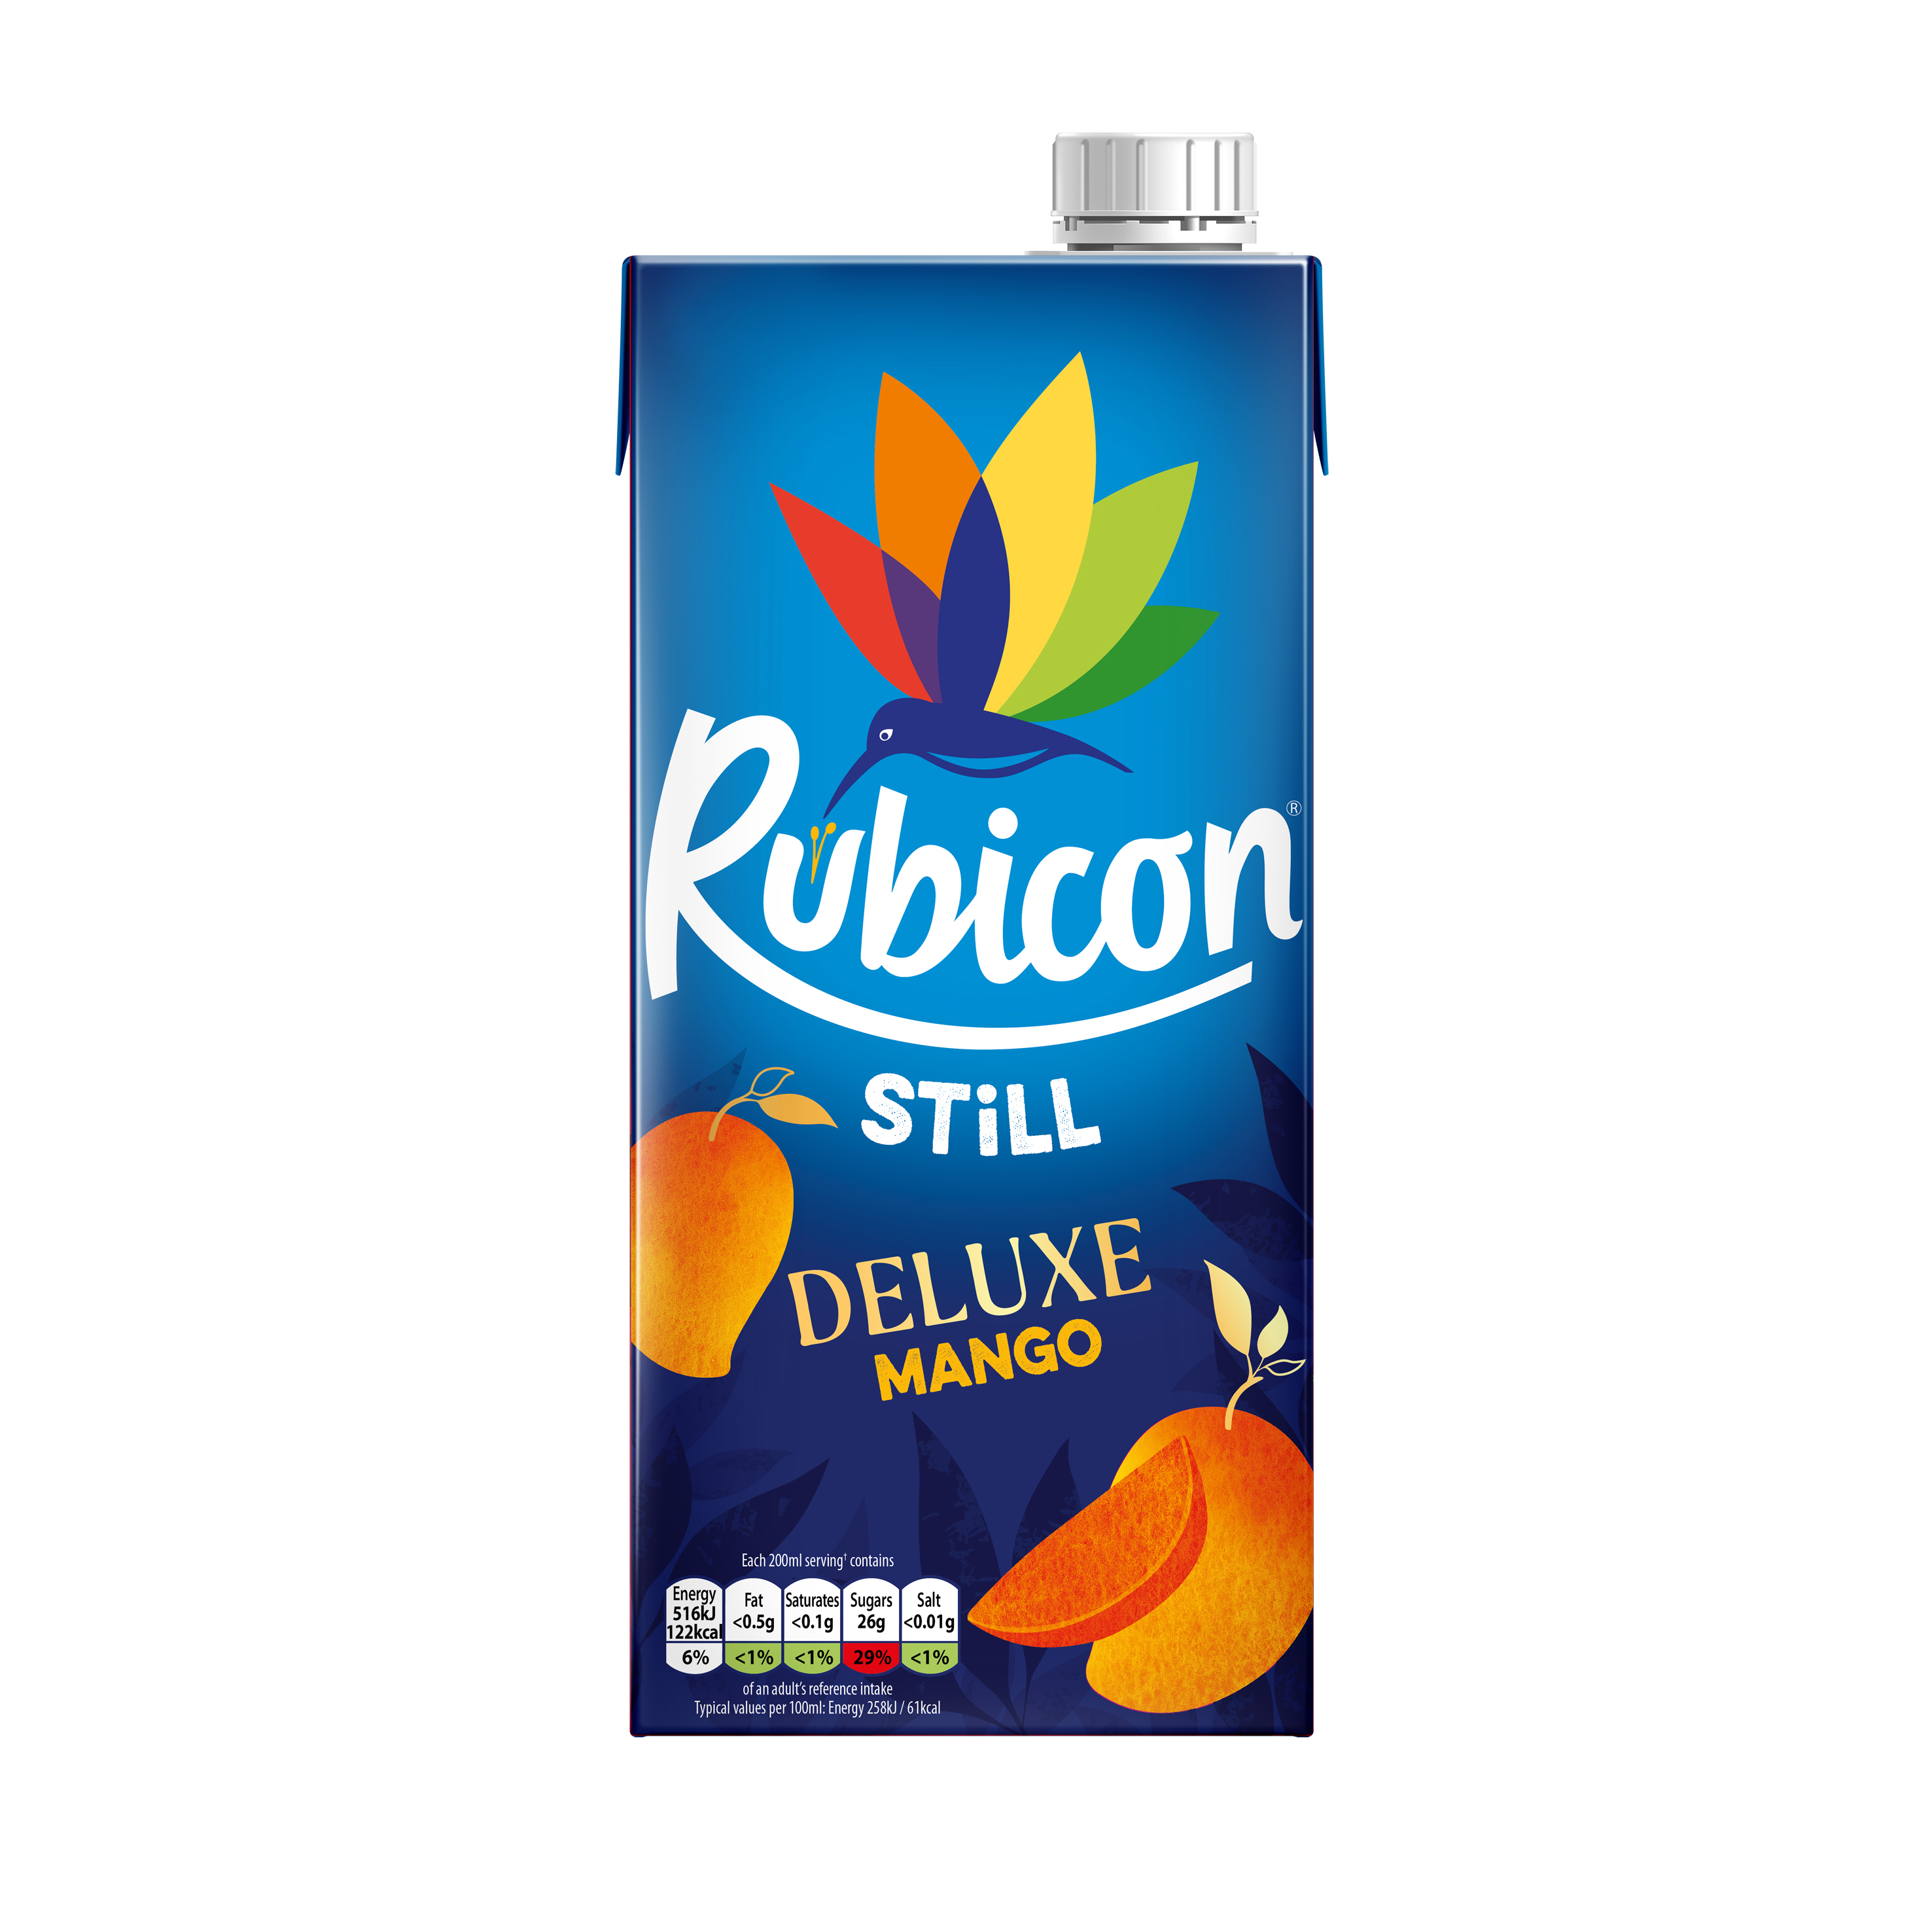 Rubicon Deluxe Mango